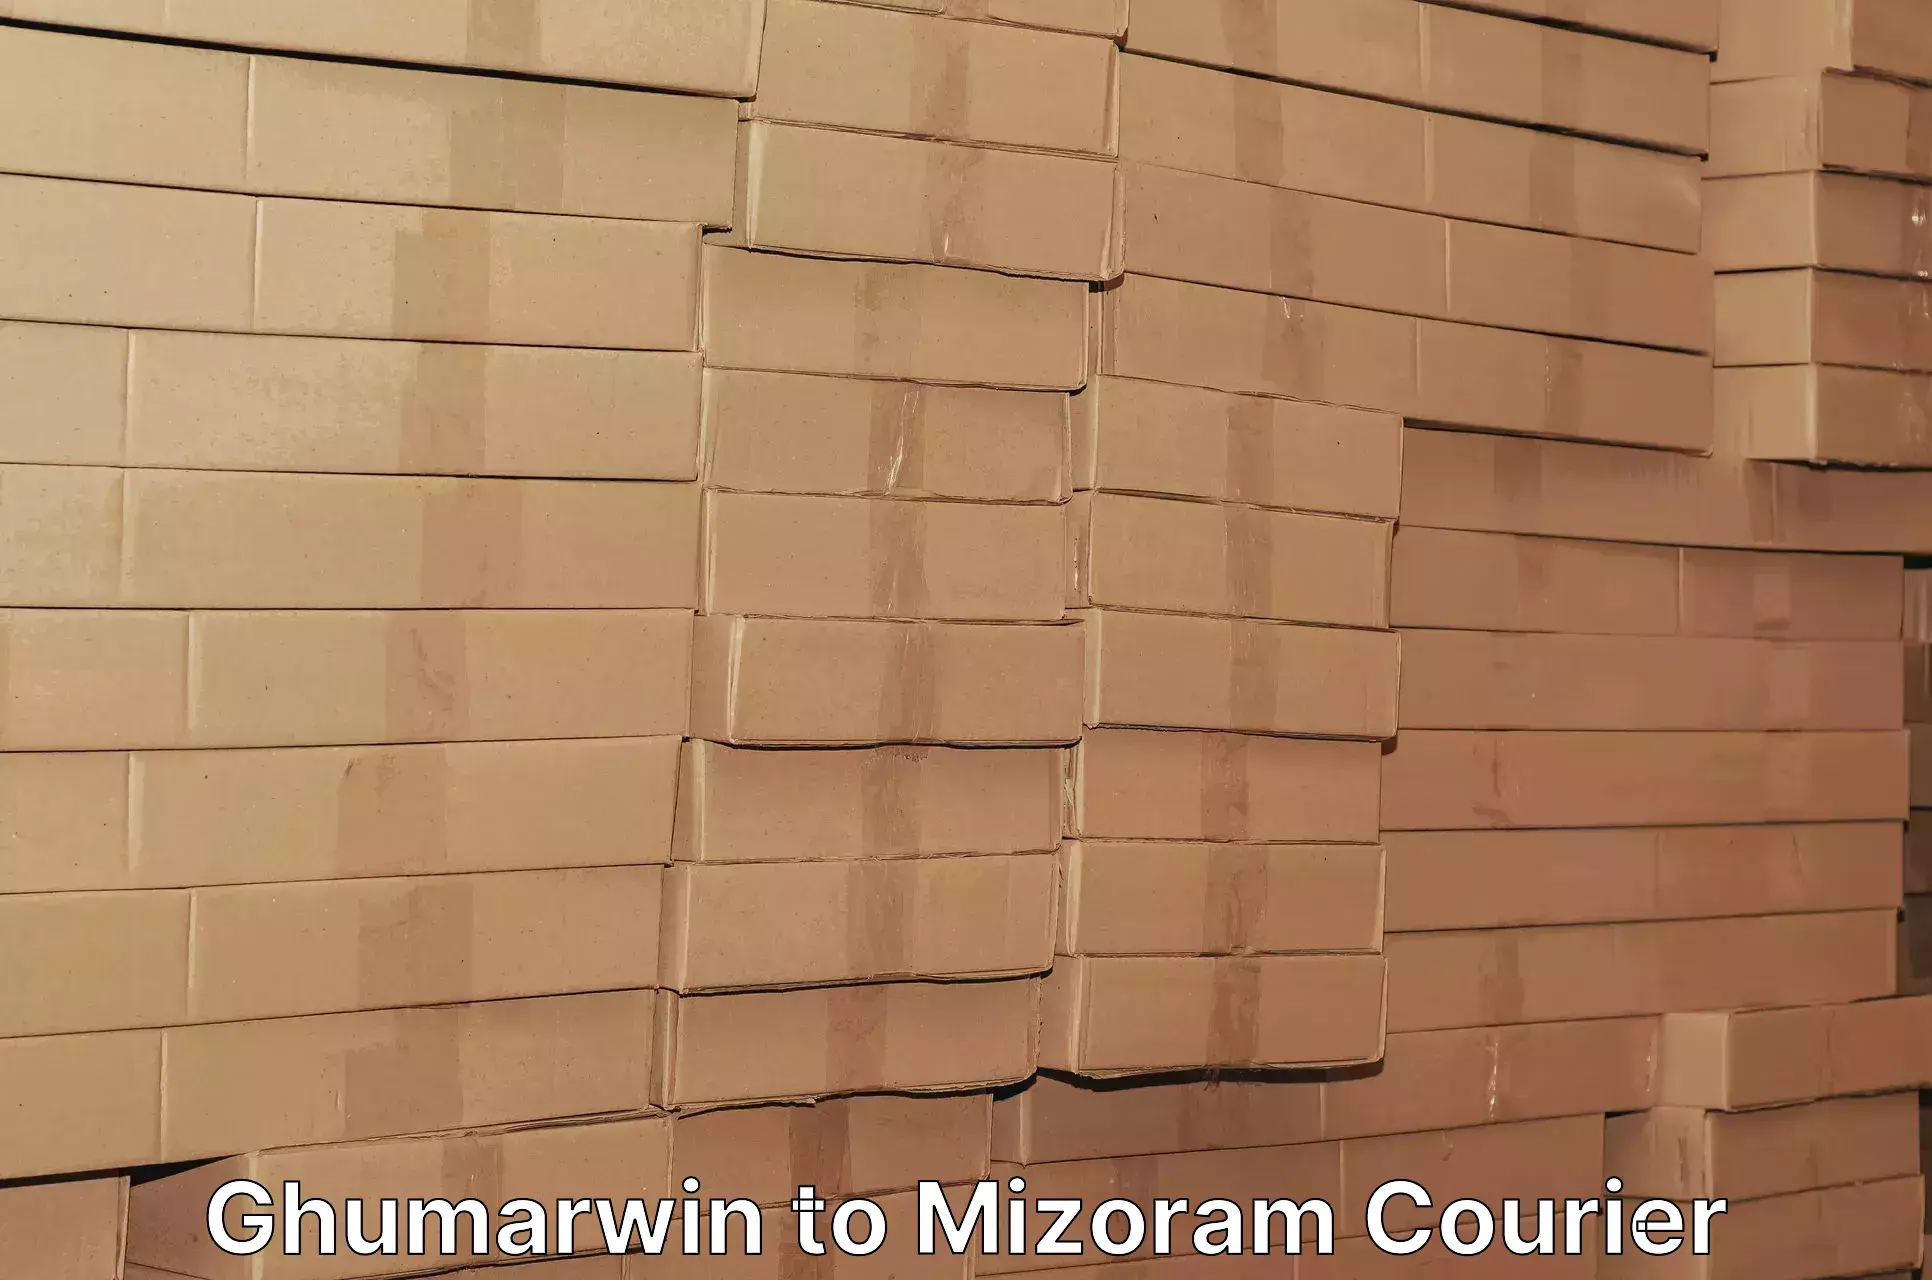 Express courier capabilities in Ghumarwin to Mizoram